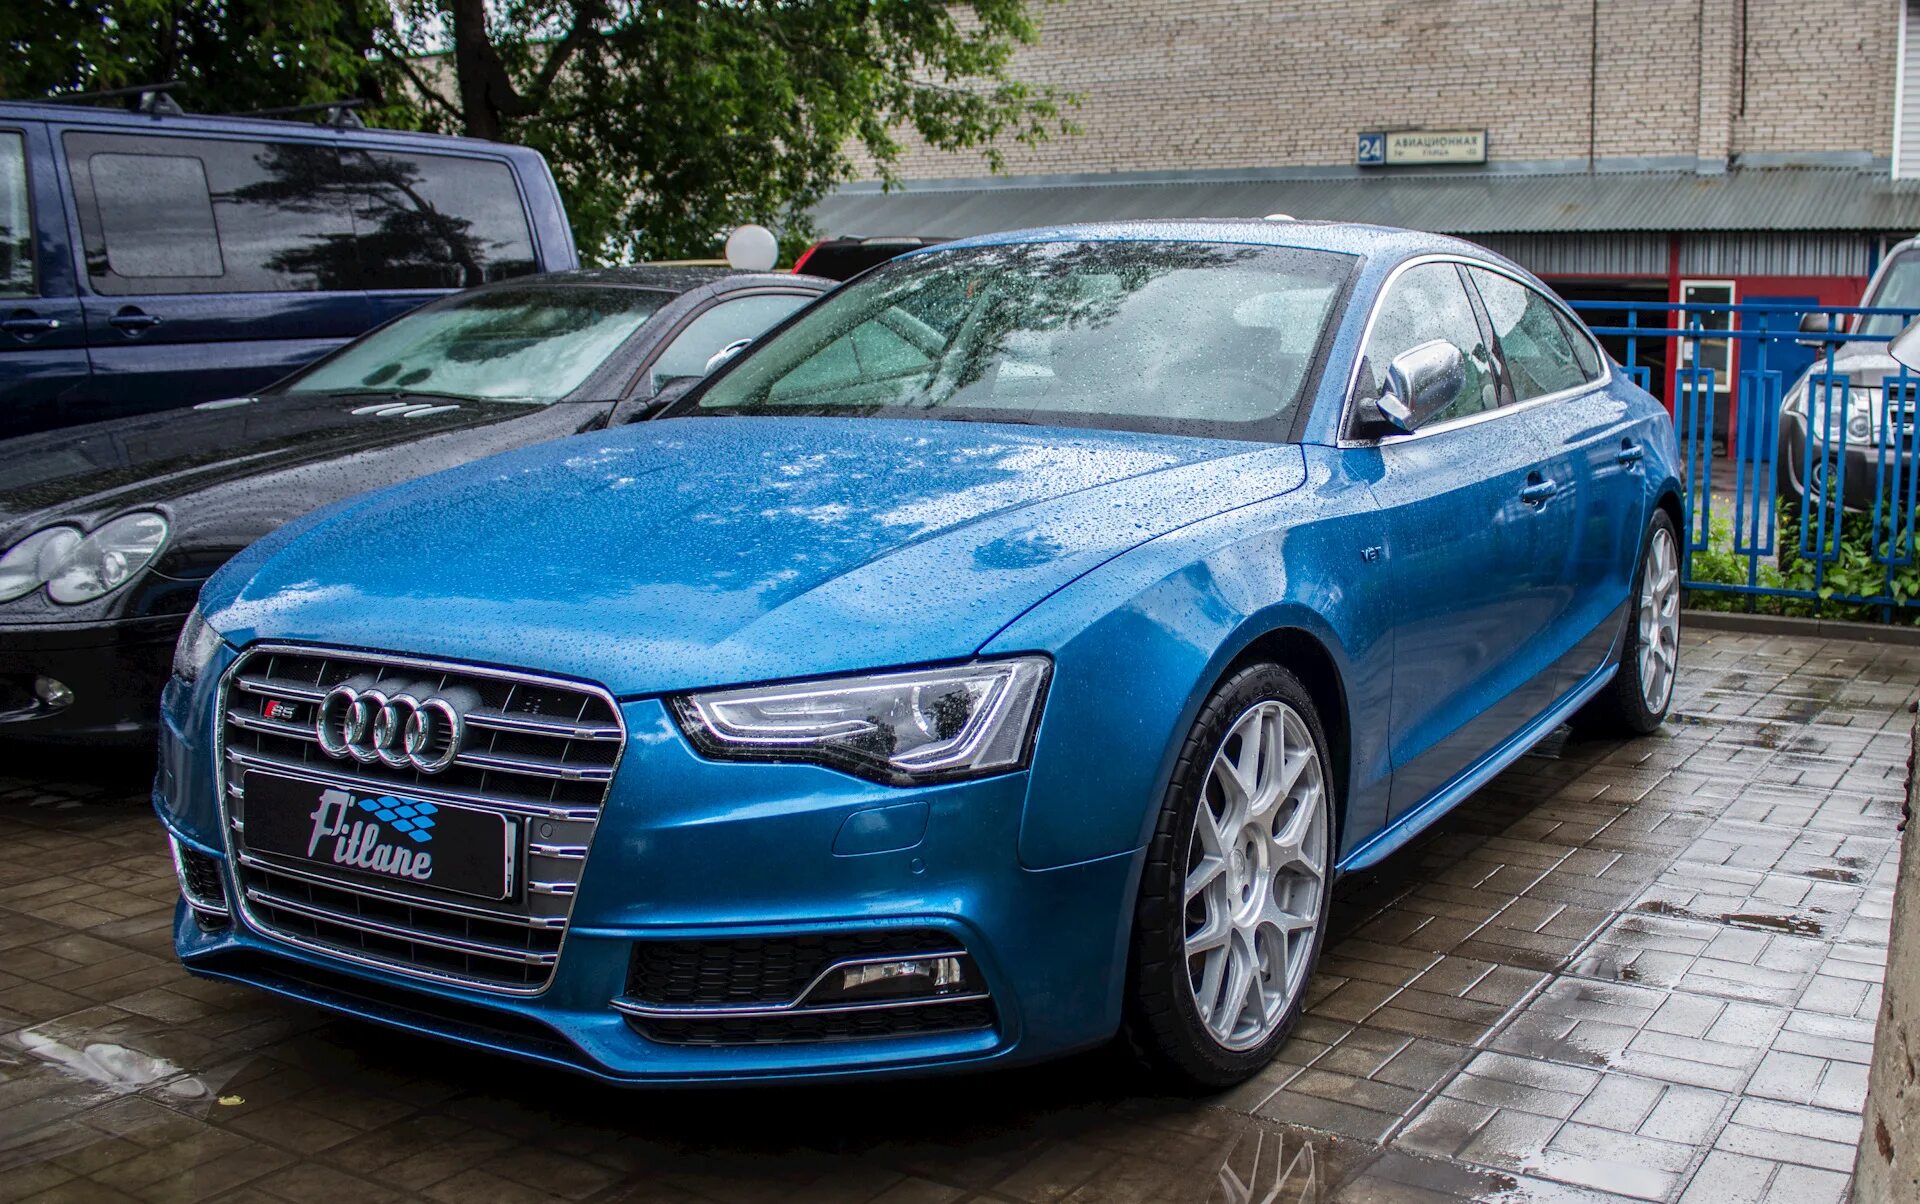 6 синего цвета. Audi s5 синяя. Audi s4 Blue 2021. Ауди а6 2021 синяя. Ауди а6 голубая 2021.